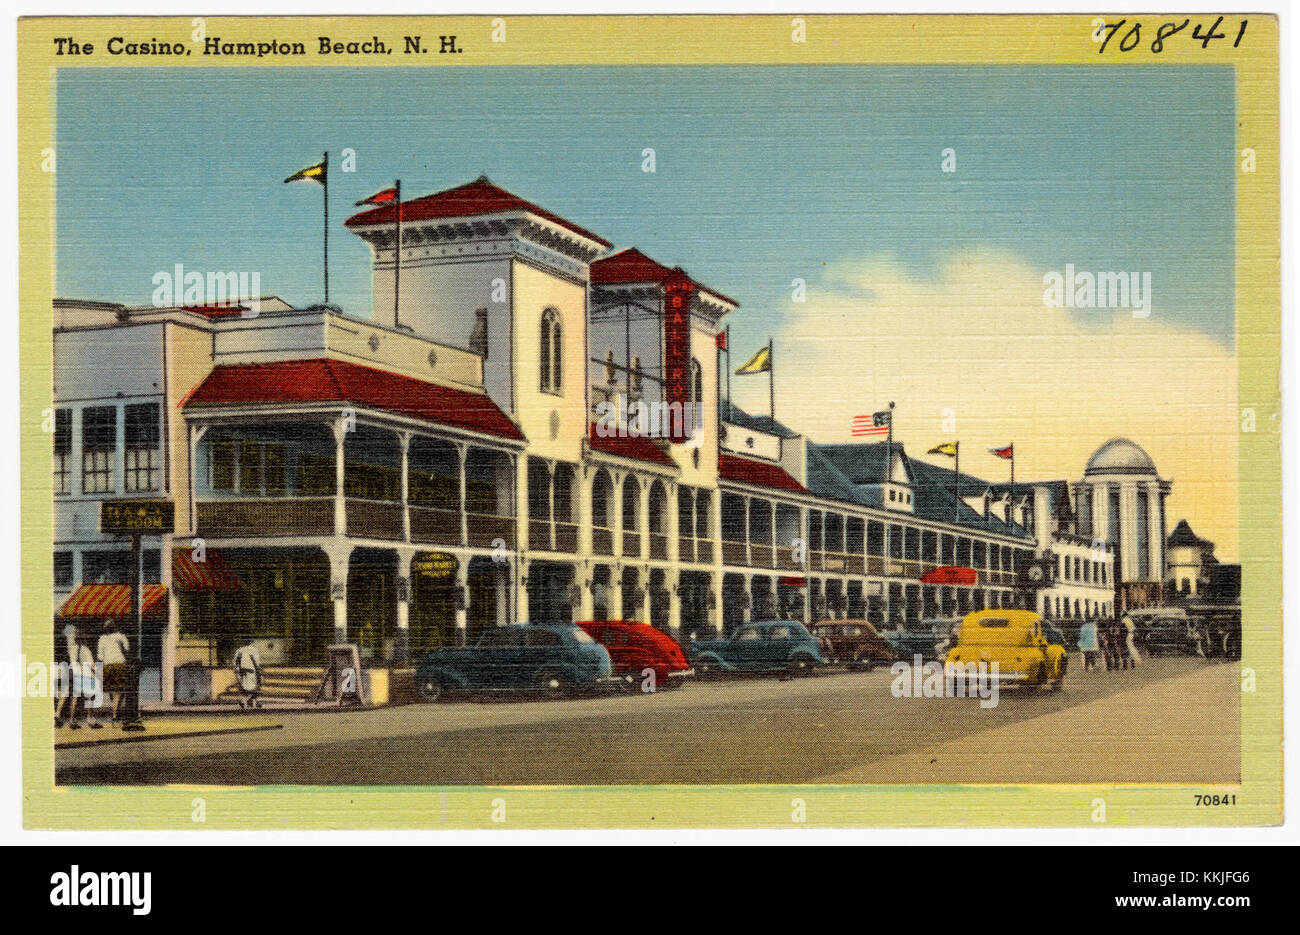 The Casino, Hampton Beach, N.H (70841) Foto Stock